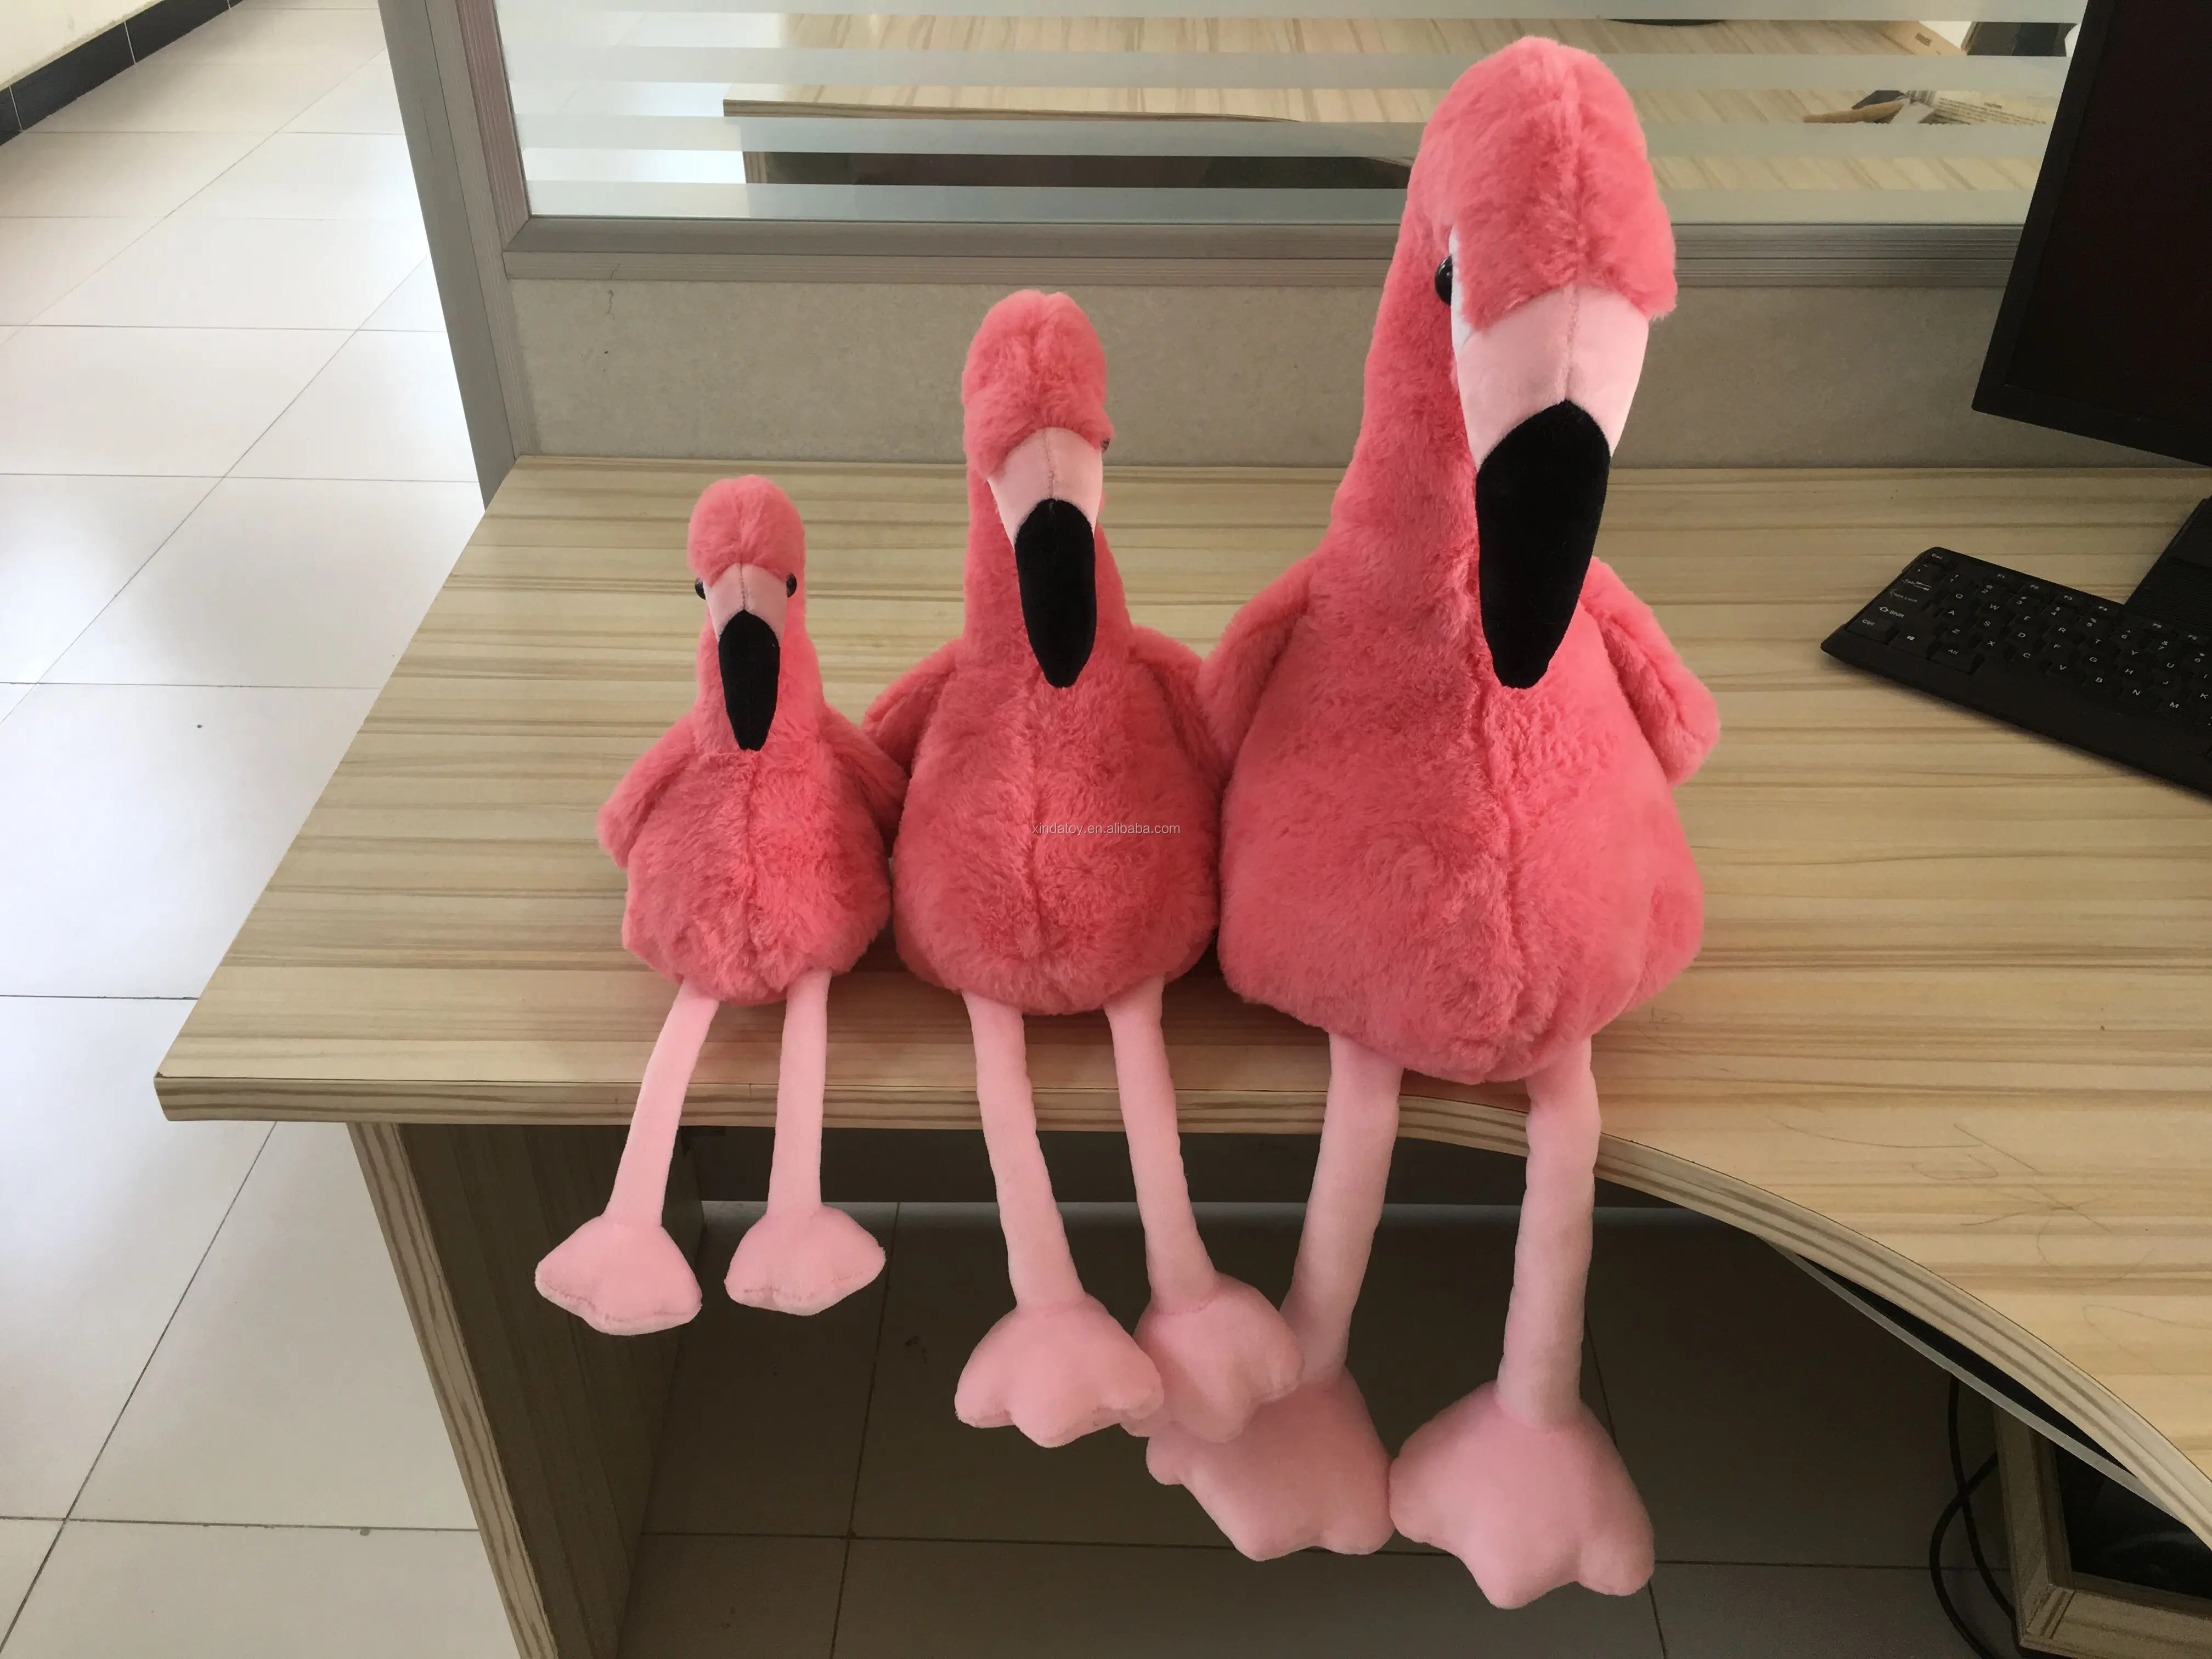 flamingo soft toy